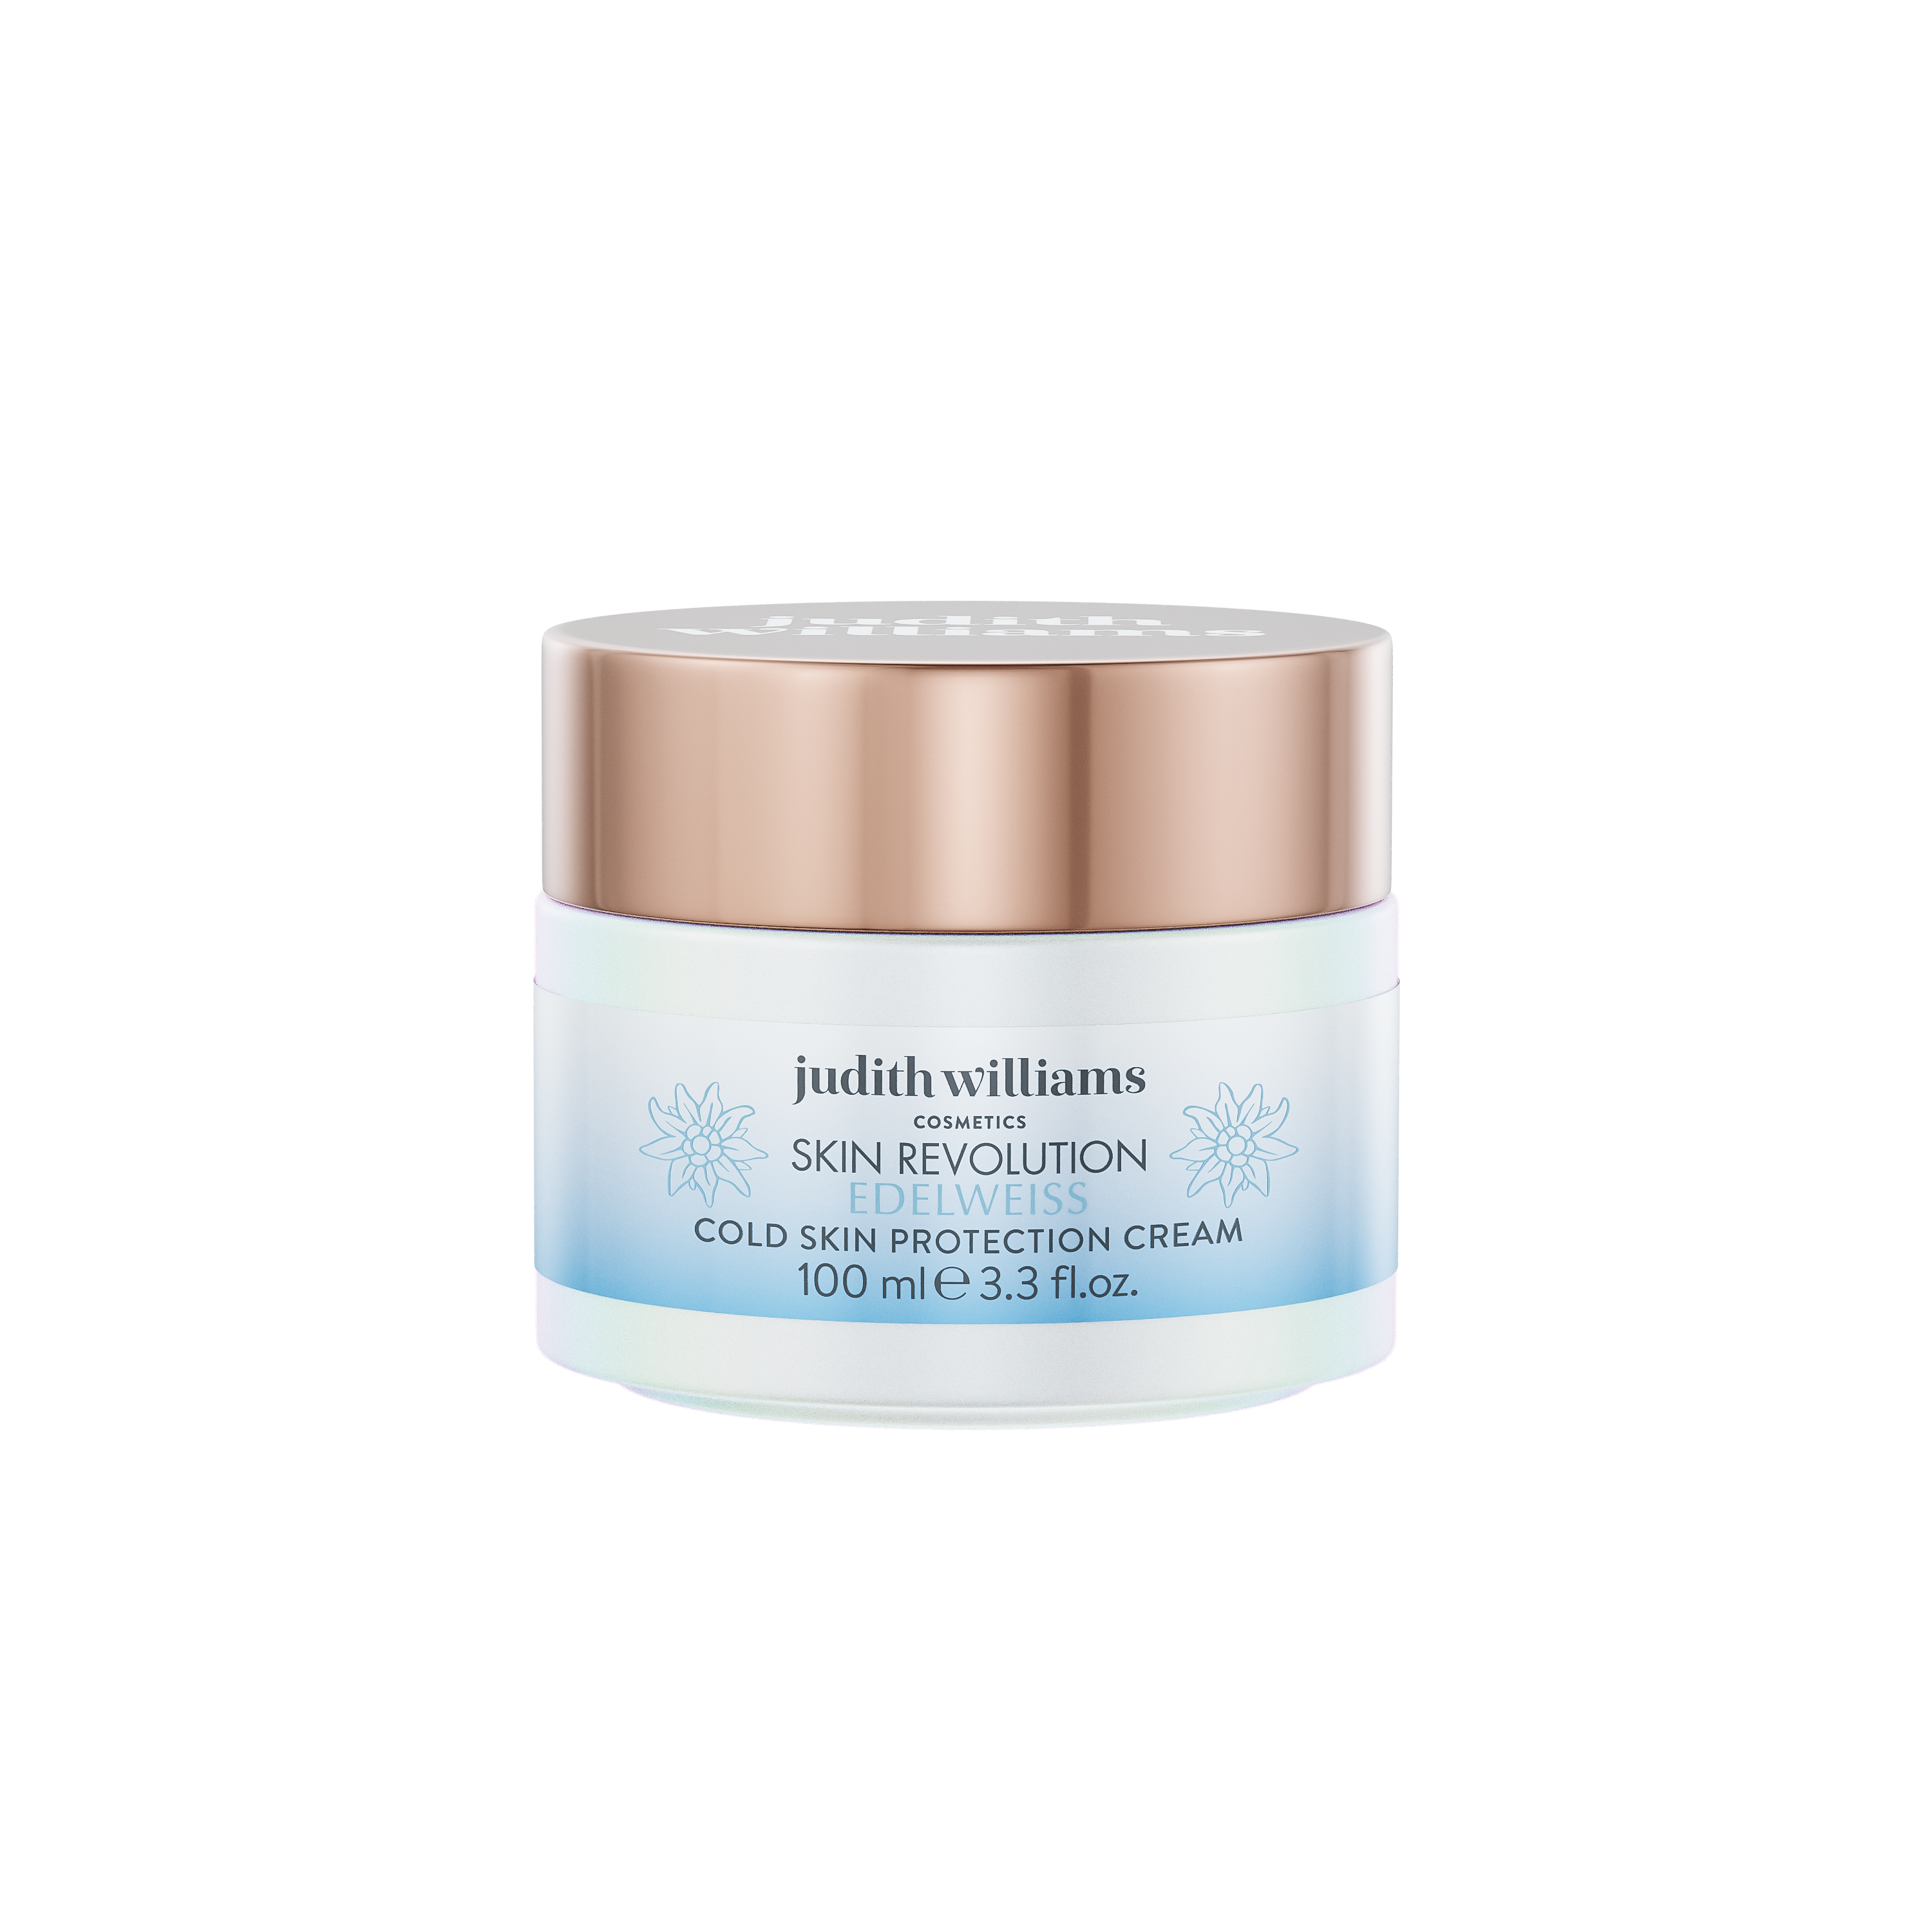 Gesichtscreme | Skin Revolution Edelweiss | Cold Skin Protection Cream | Judith Williams